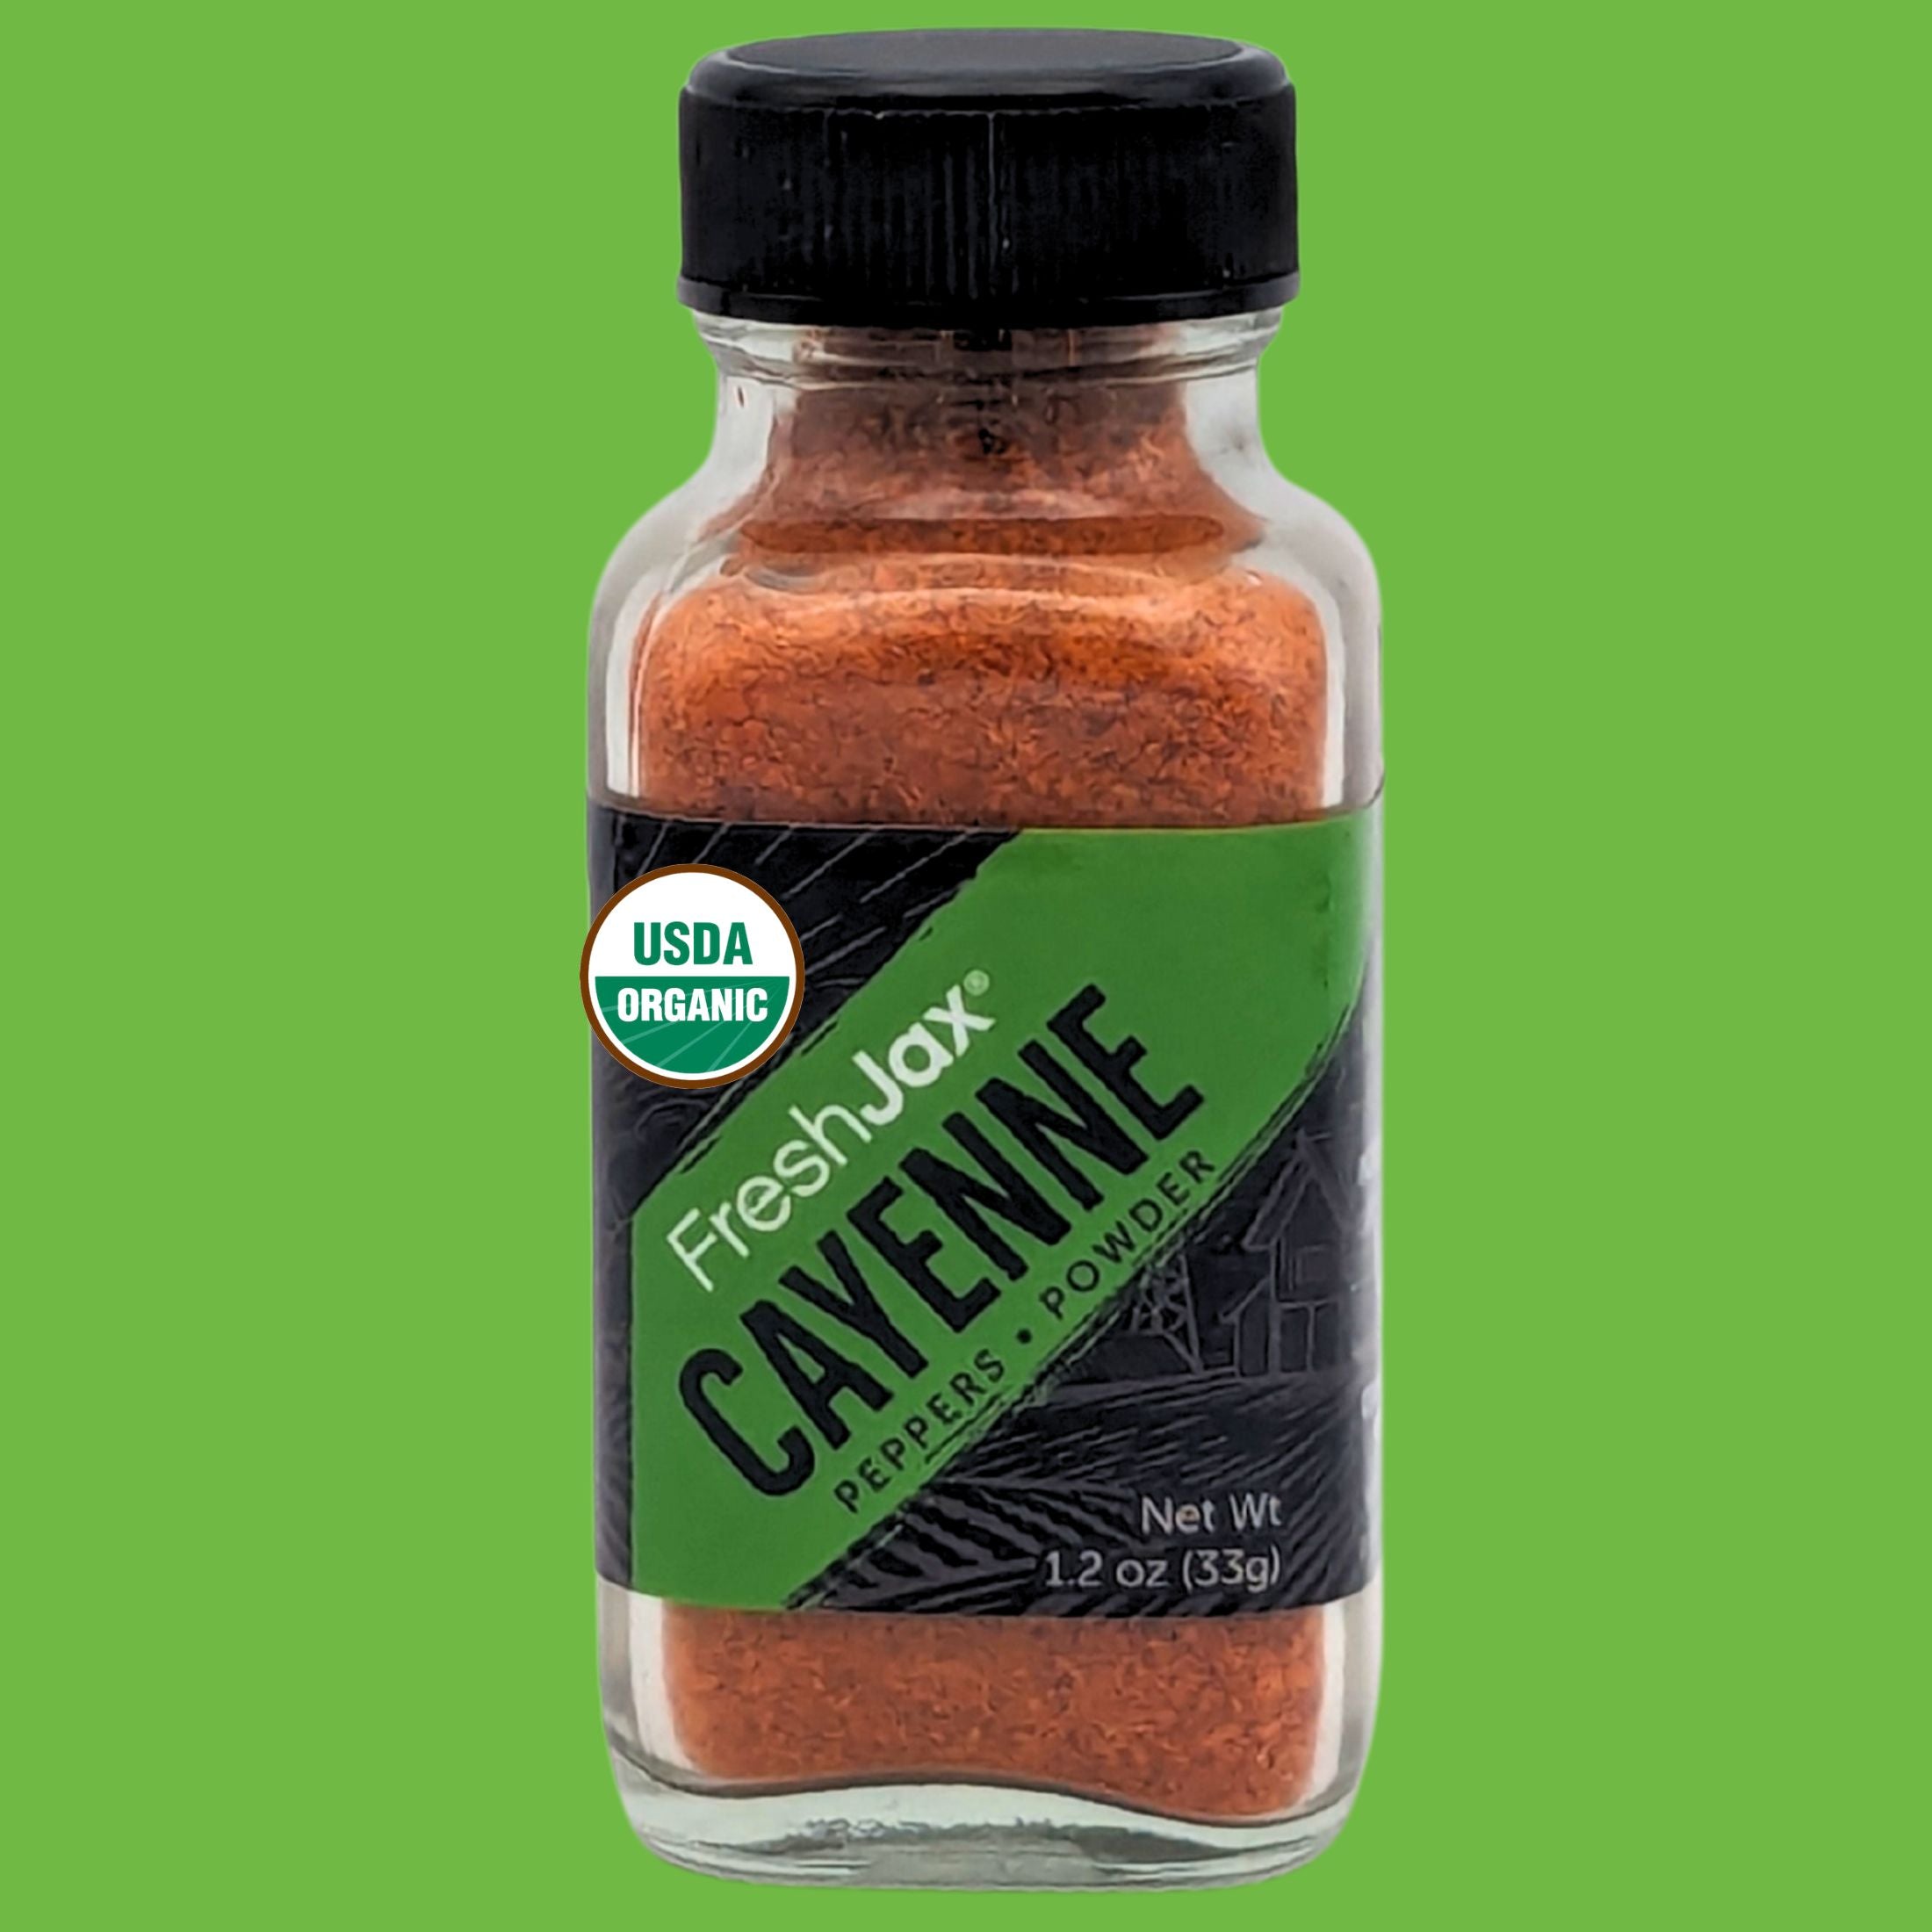 Organic Cayenne